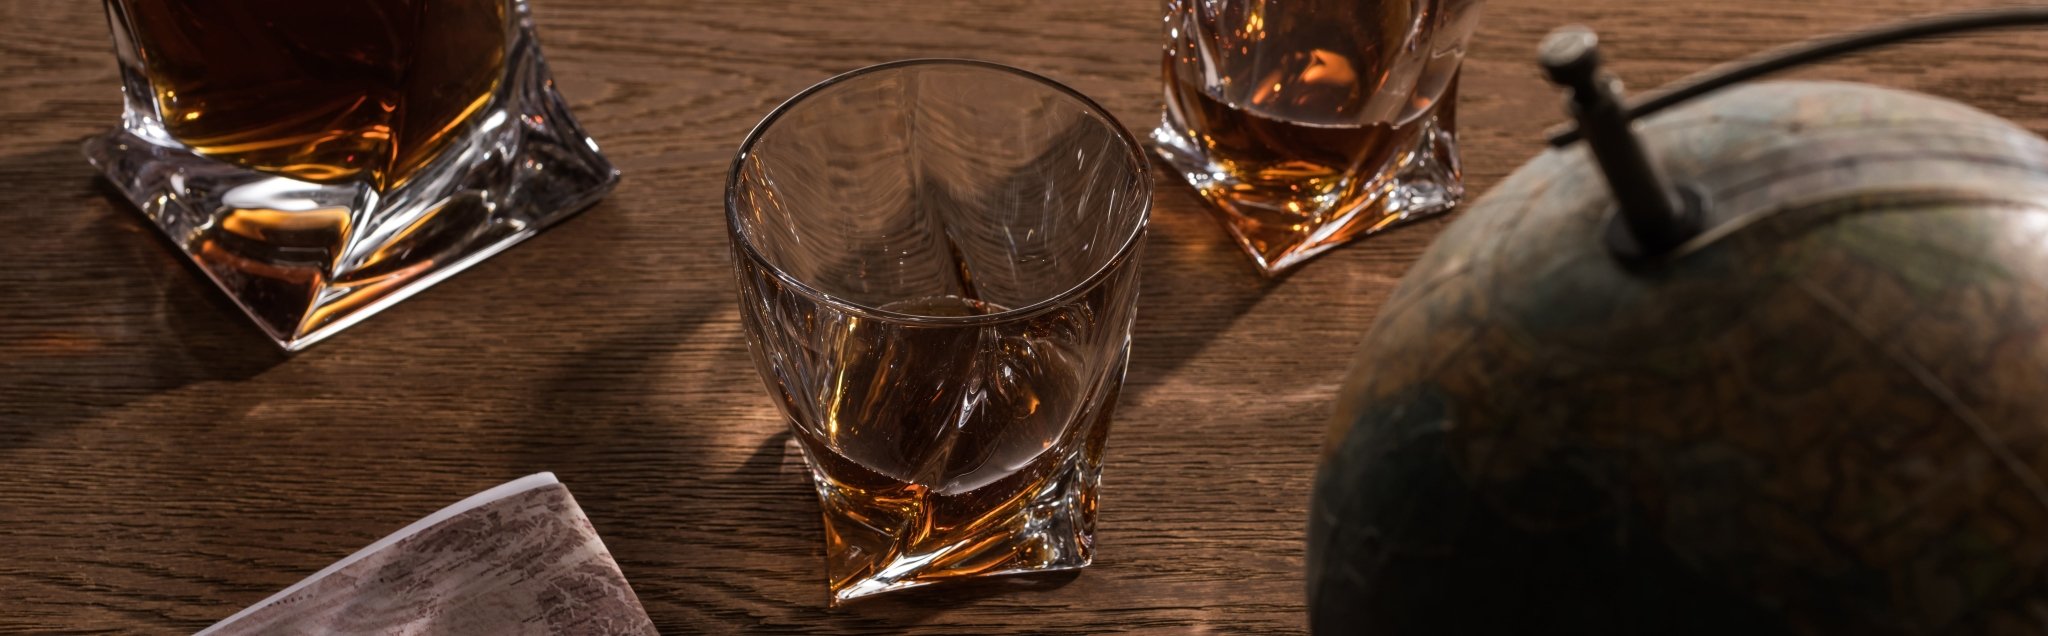 Whisky - CG Liquor